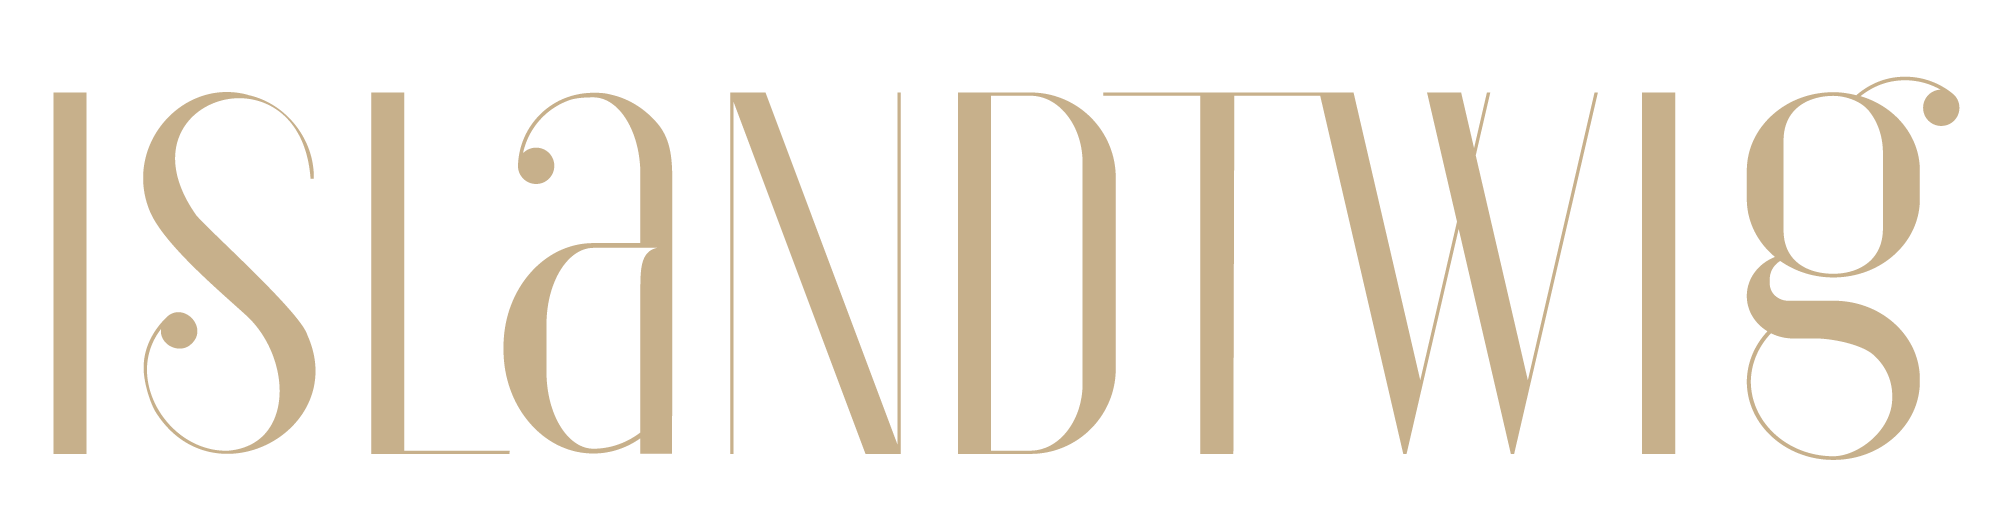 islandtwig-logo